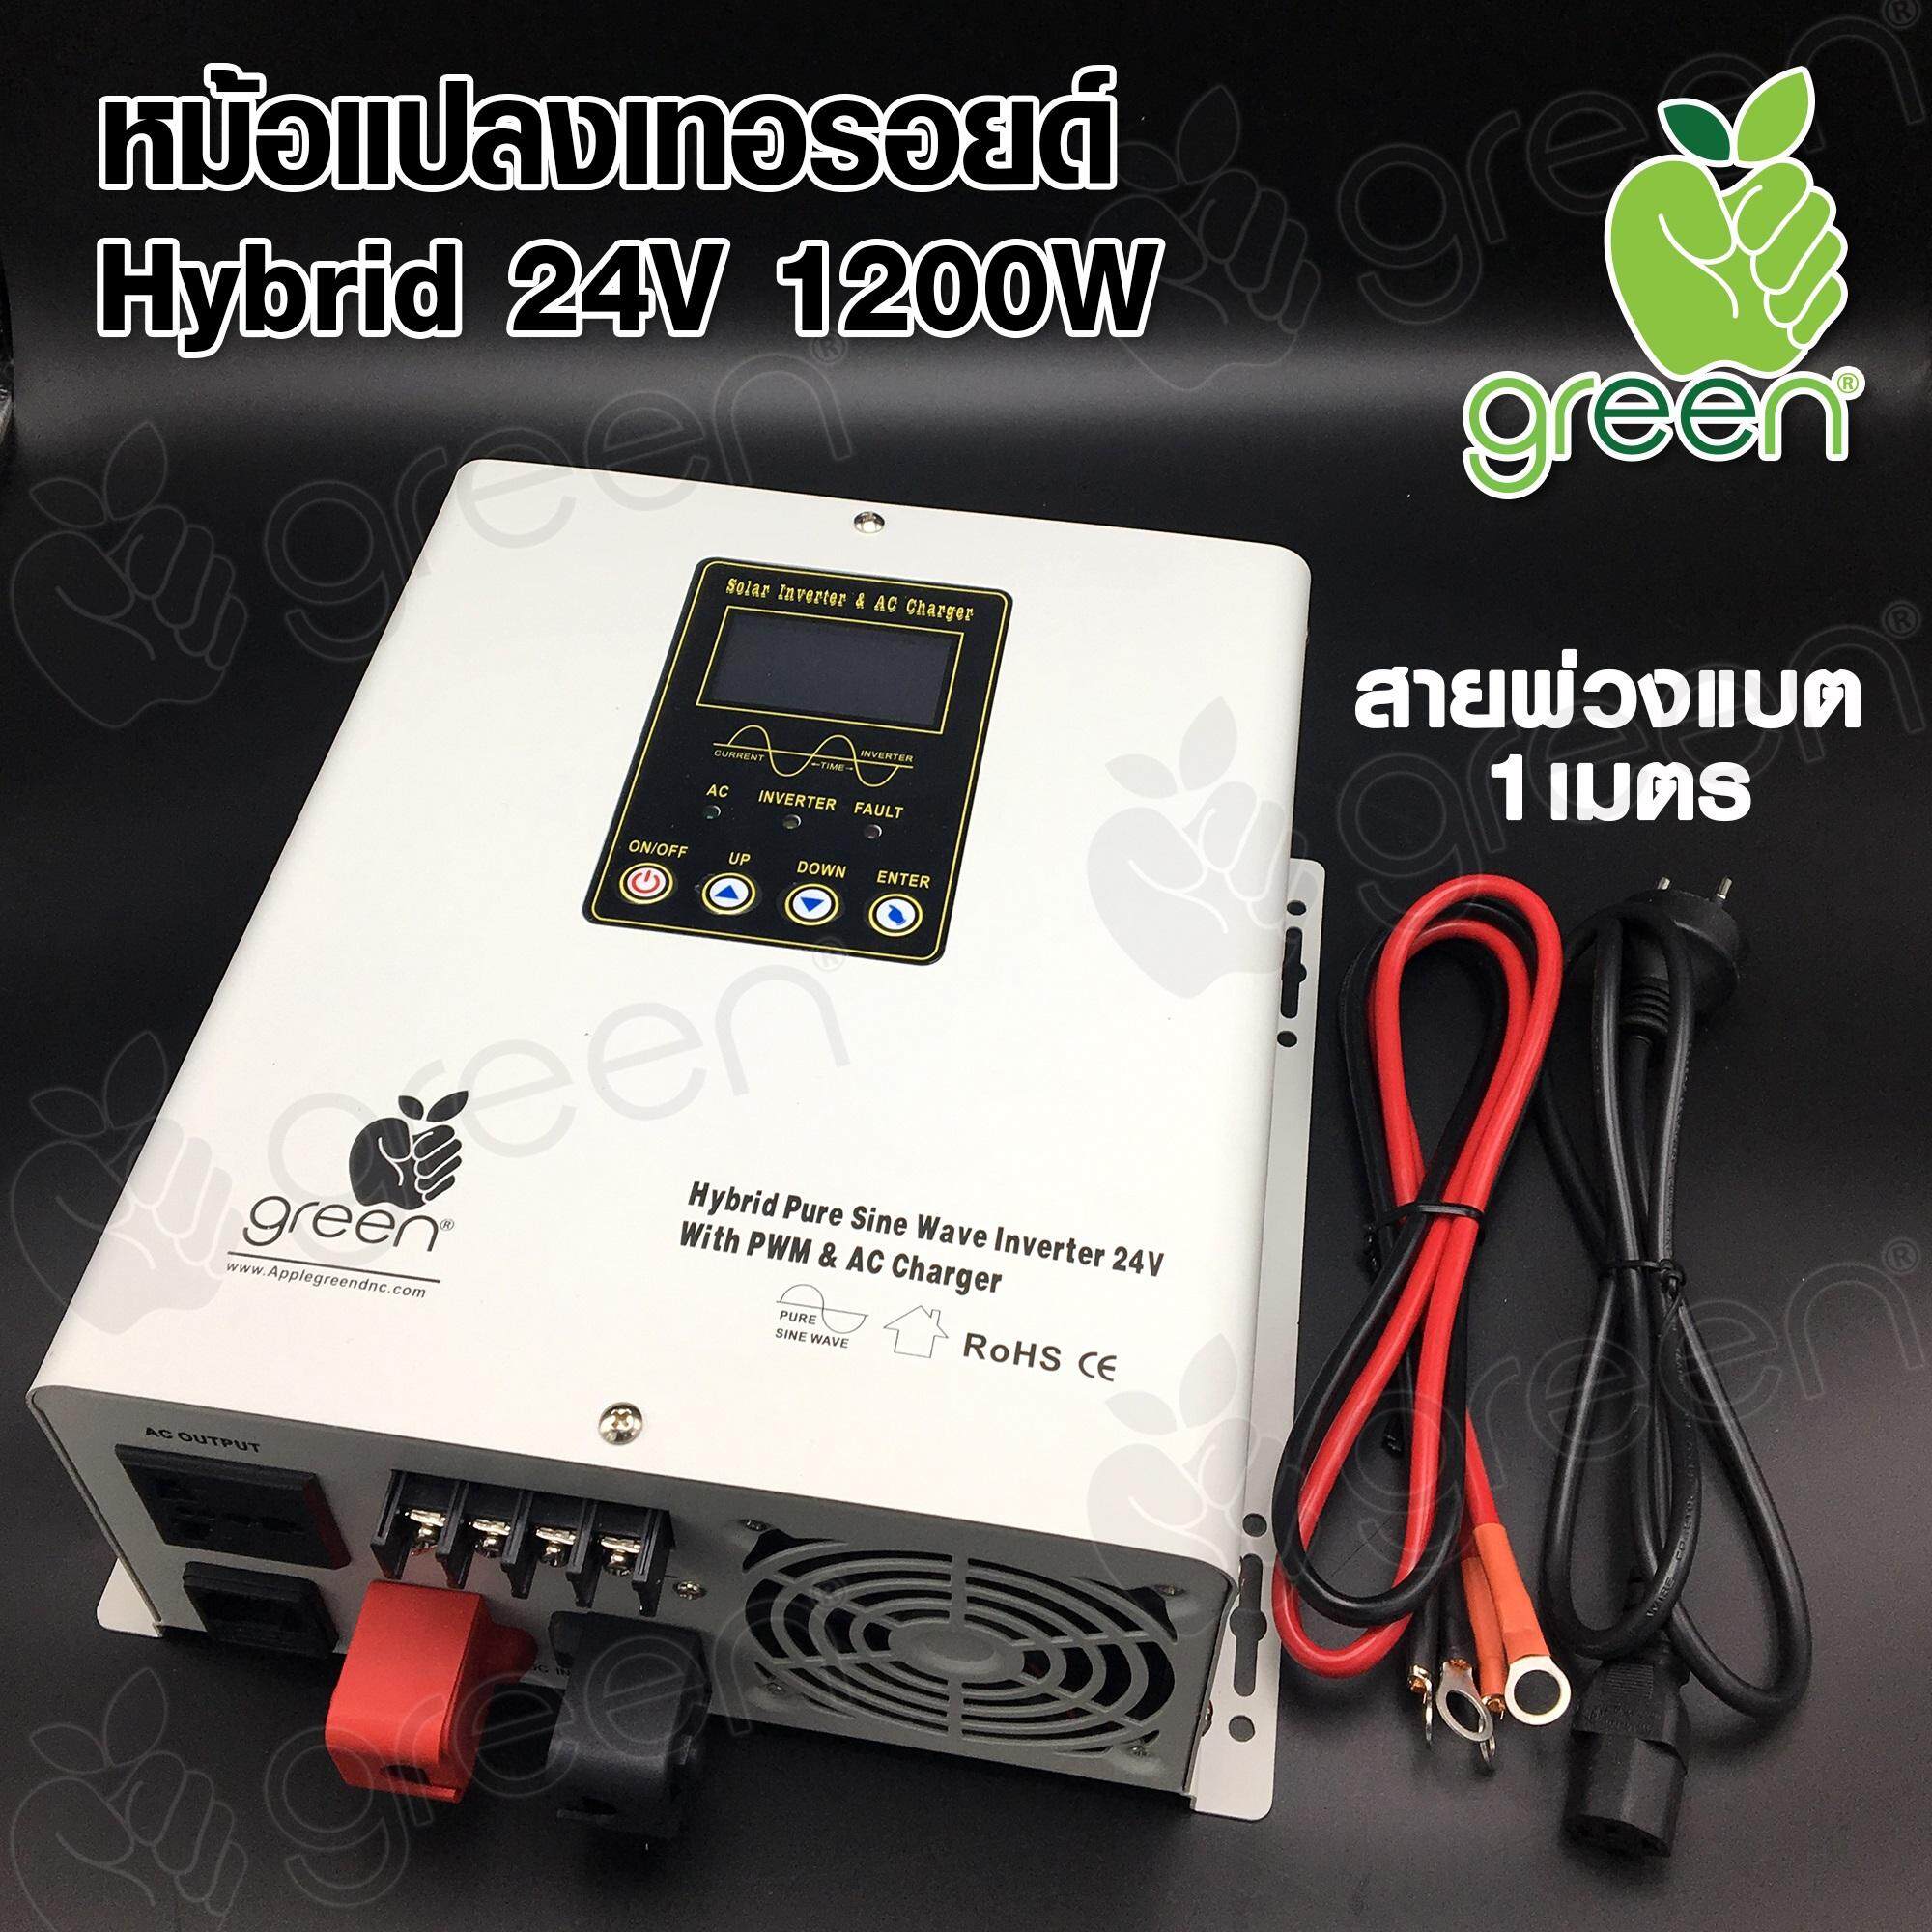 Applegreen Inverter pure sine wave หม้อแปลงเทอรอยด์ ไฮบริด HSI 24V 1200W PWM 30A Hybrid off grid Auto bypass Transformer AC in/out AC charger UPS ชาร์จแบตเตอรี่ ใช้กับระบบโซล่าเซลล์ ต่อกับไฟบ้านได้ เหมาะกับงานหนัก พีคได้ 3 เท่า มาตรฐานยุโรป